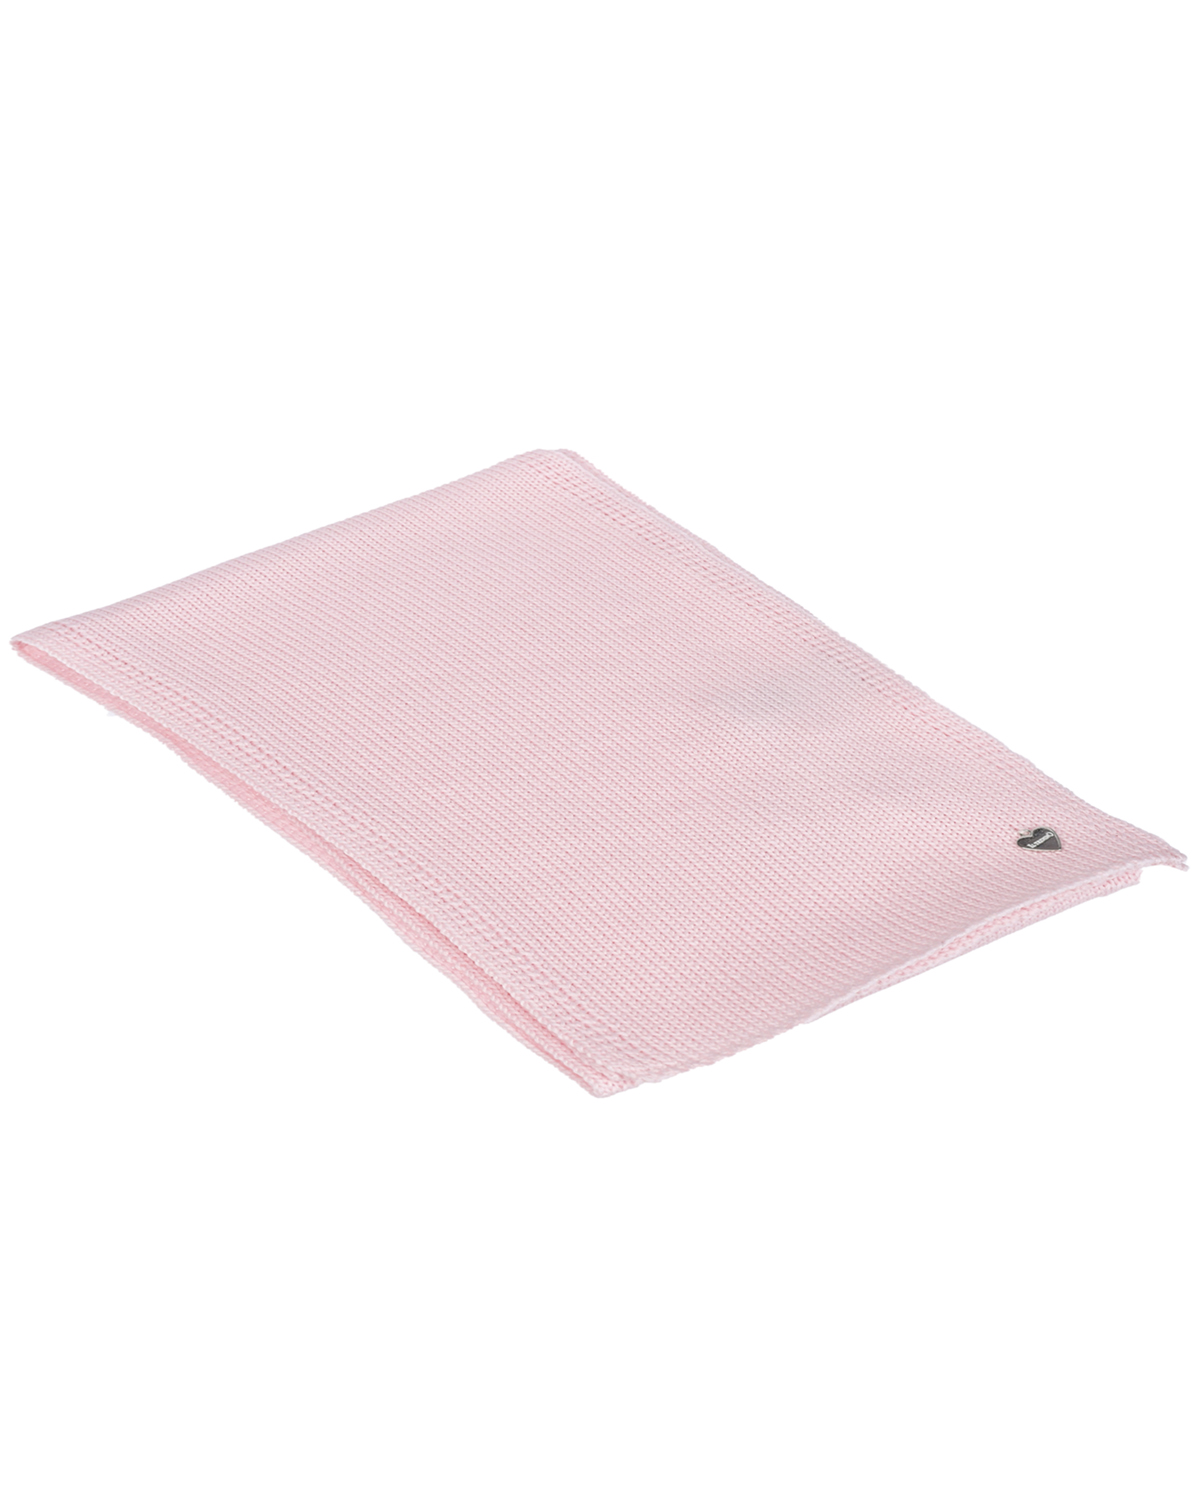 Нежно-розовый шарф из шерсти, 20х140 см Il Trenino детское, размер unica